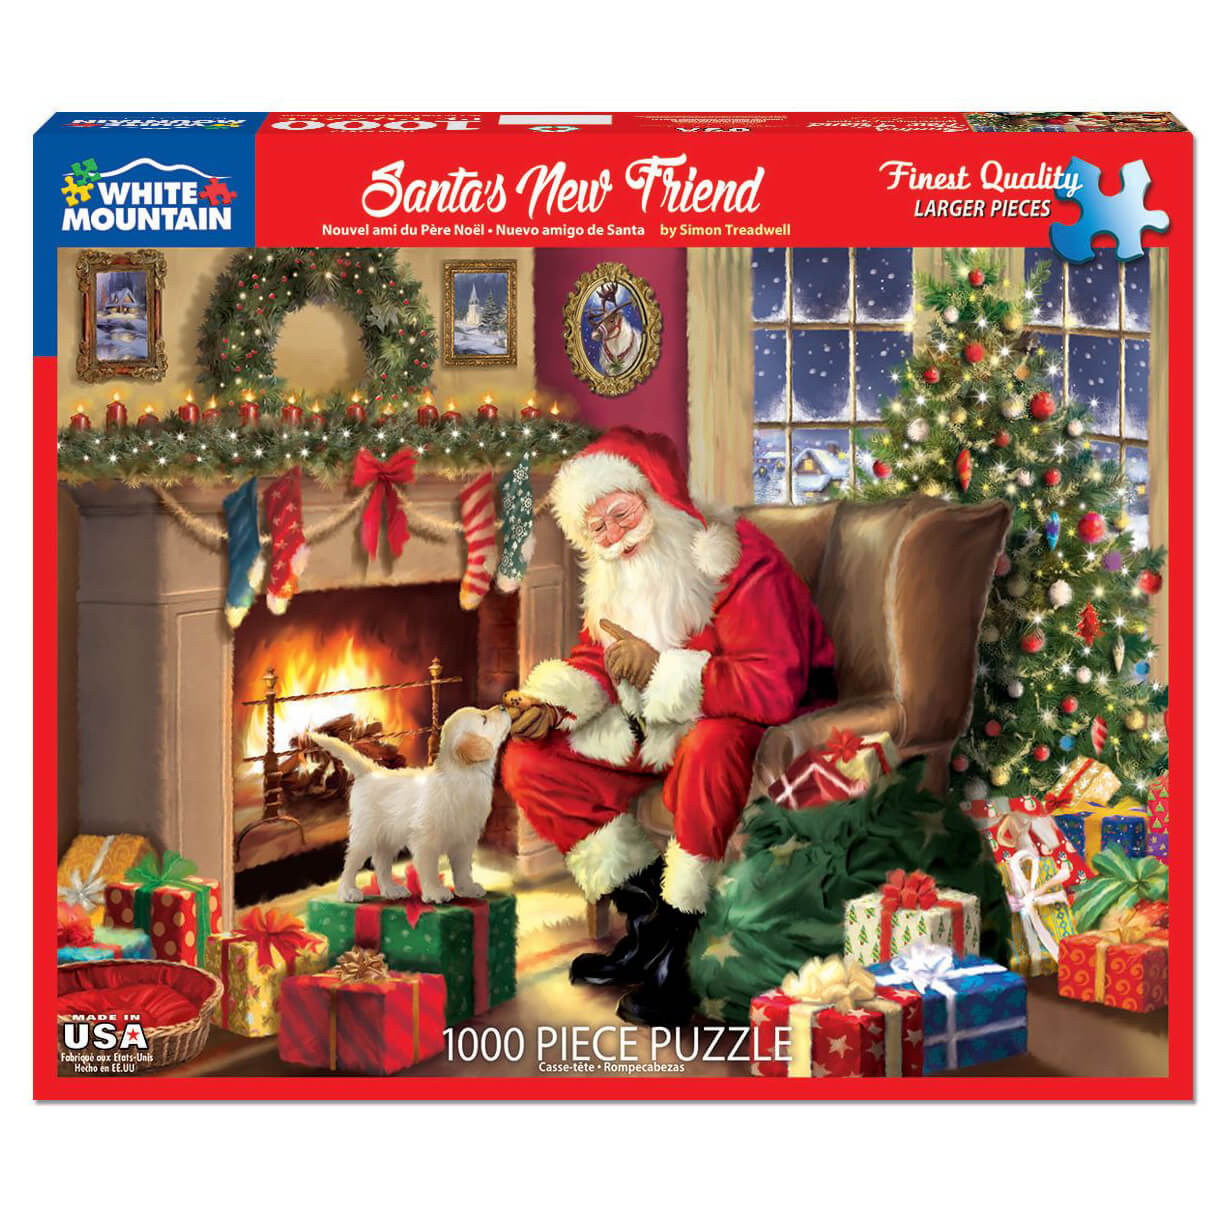 White Mountain Puzzles Santa's New Friend 1000 Piece Jigsaw Puzzle